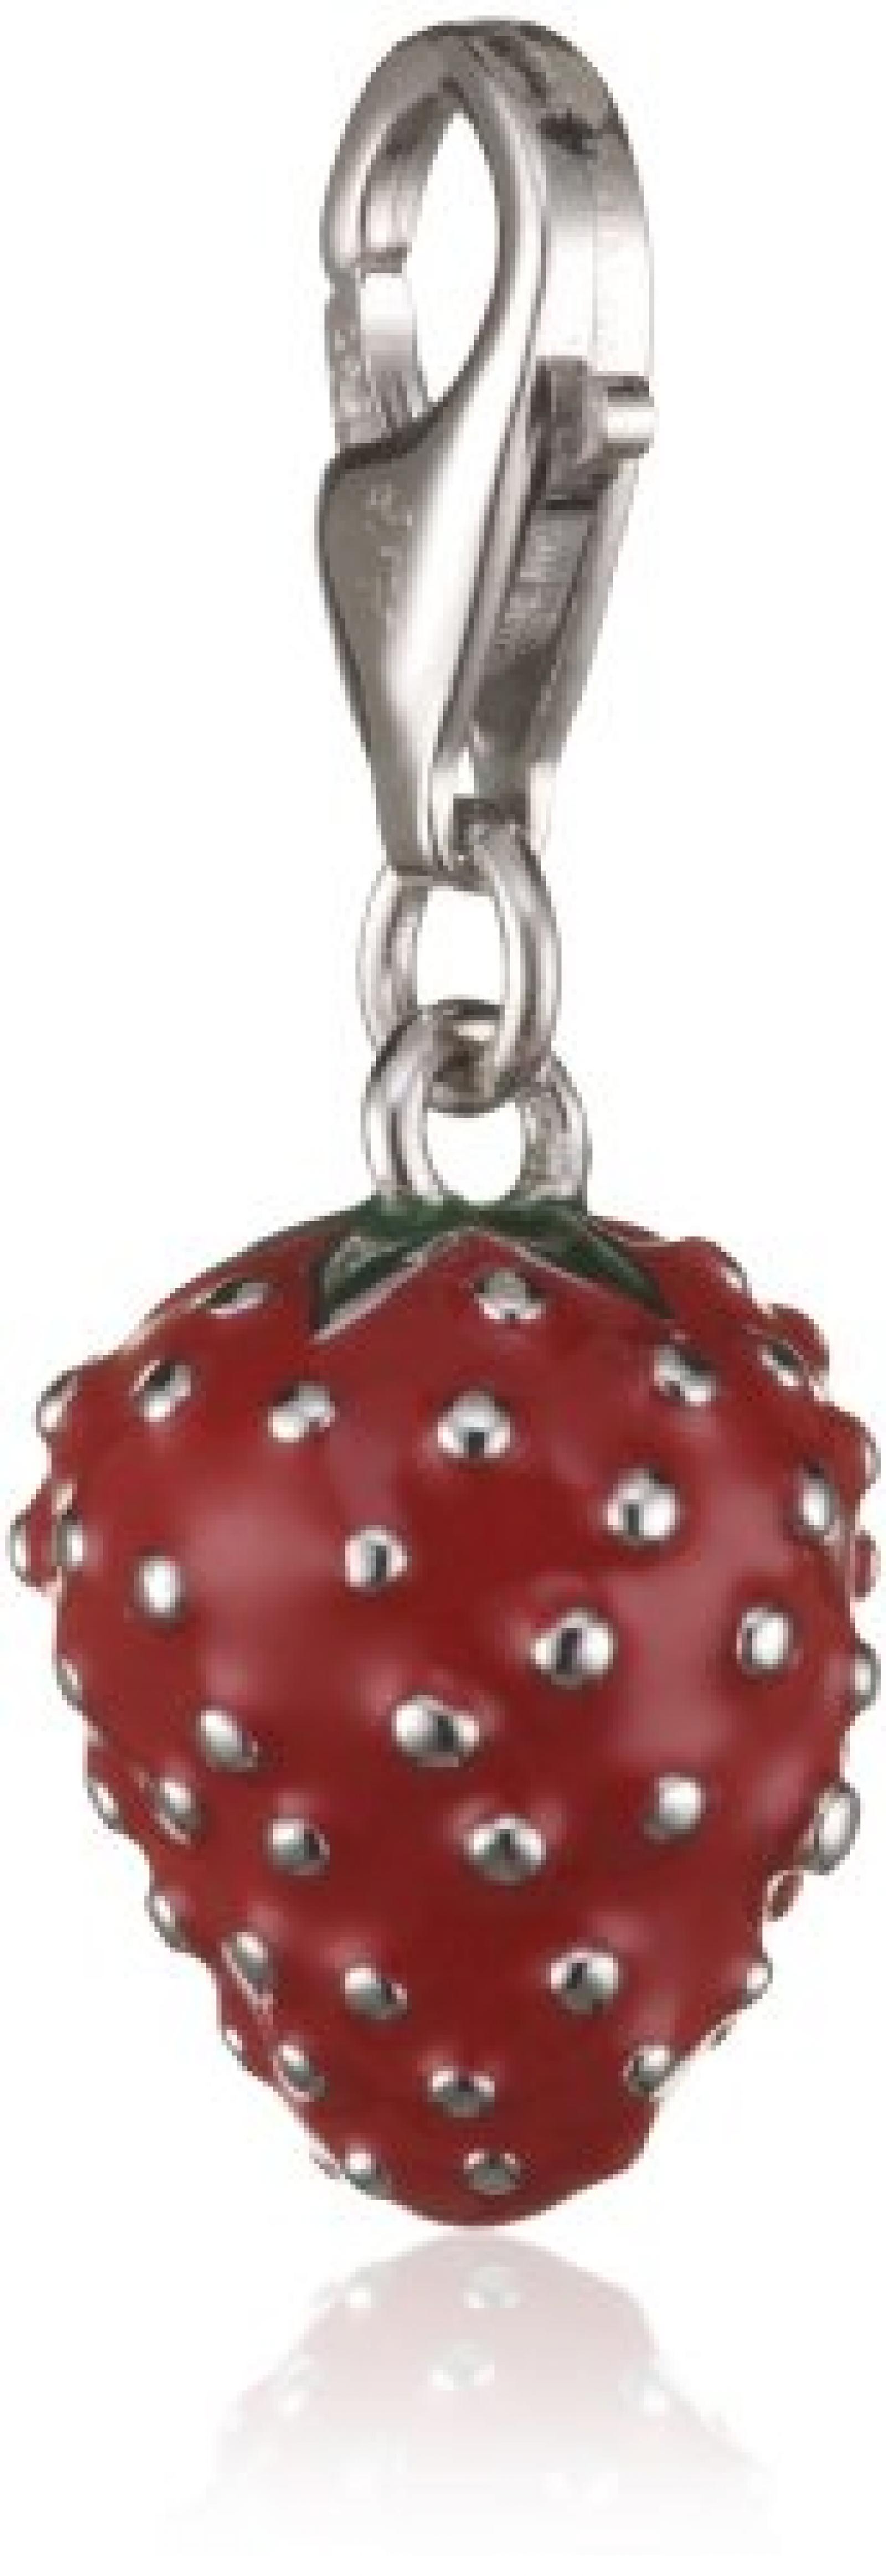 Rafaela Donata Charm Collection Damen-Charm Erdbeere 925 Sterling Silber Emaille rot / grün  60600110 